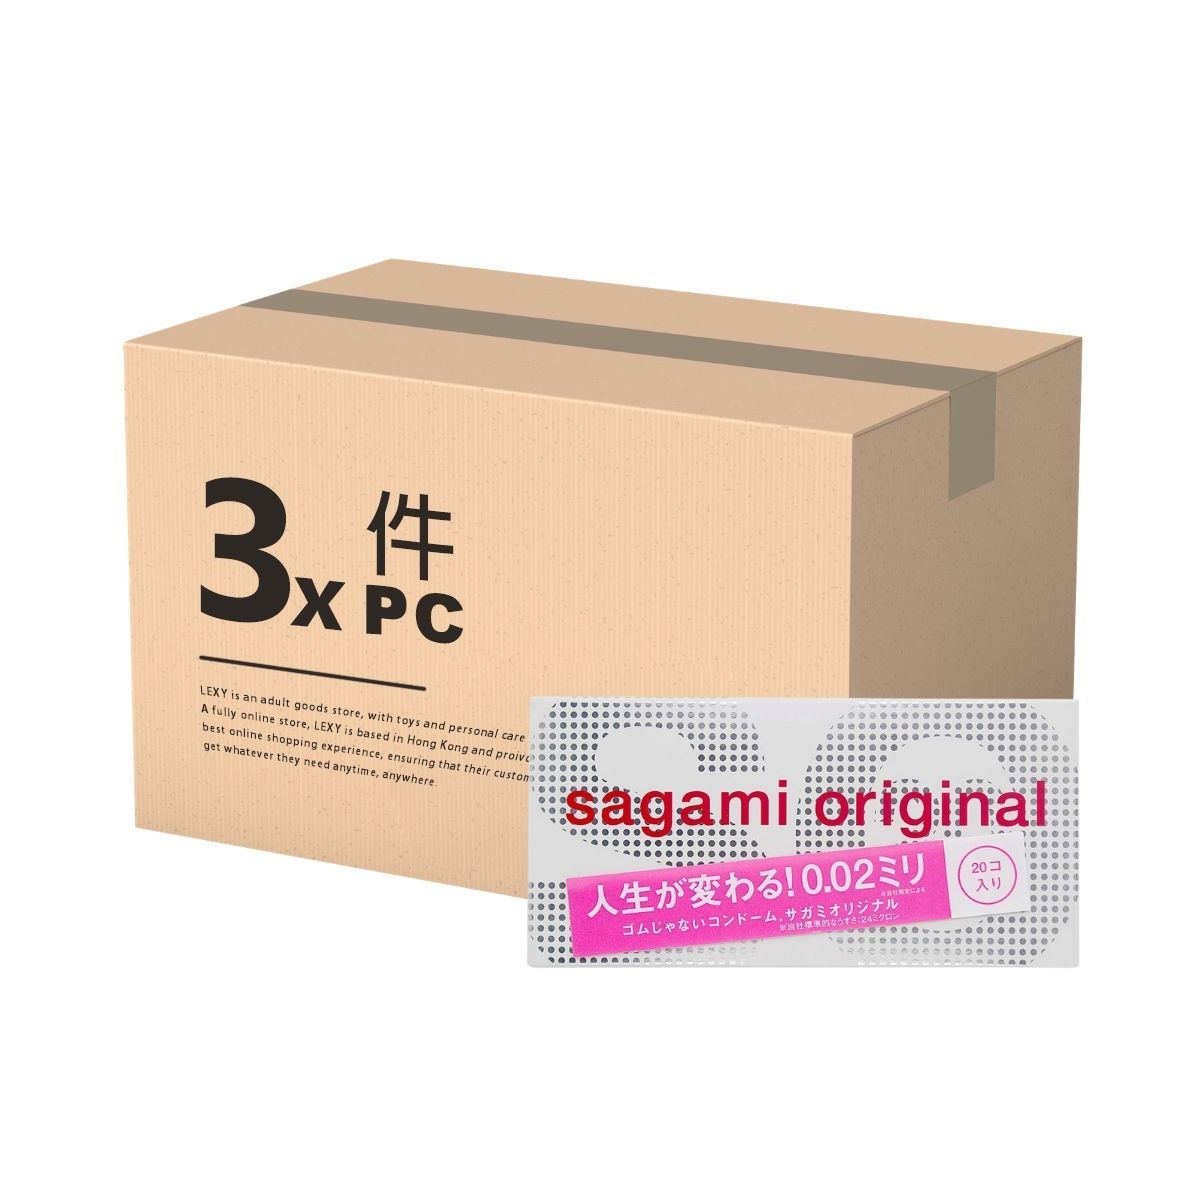 SAGAMI 相模原創 0.02 第二代 PU 安全套 20 片裝 X 3 件 優惠套裝 購買